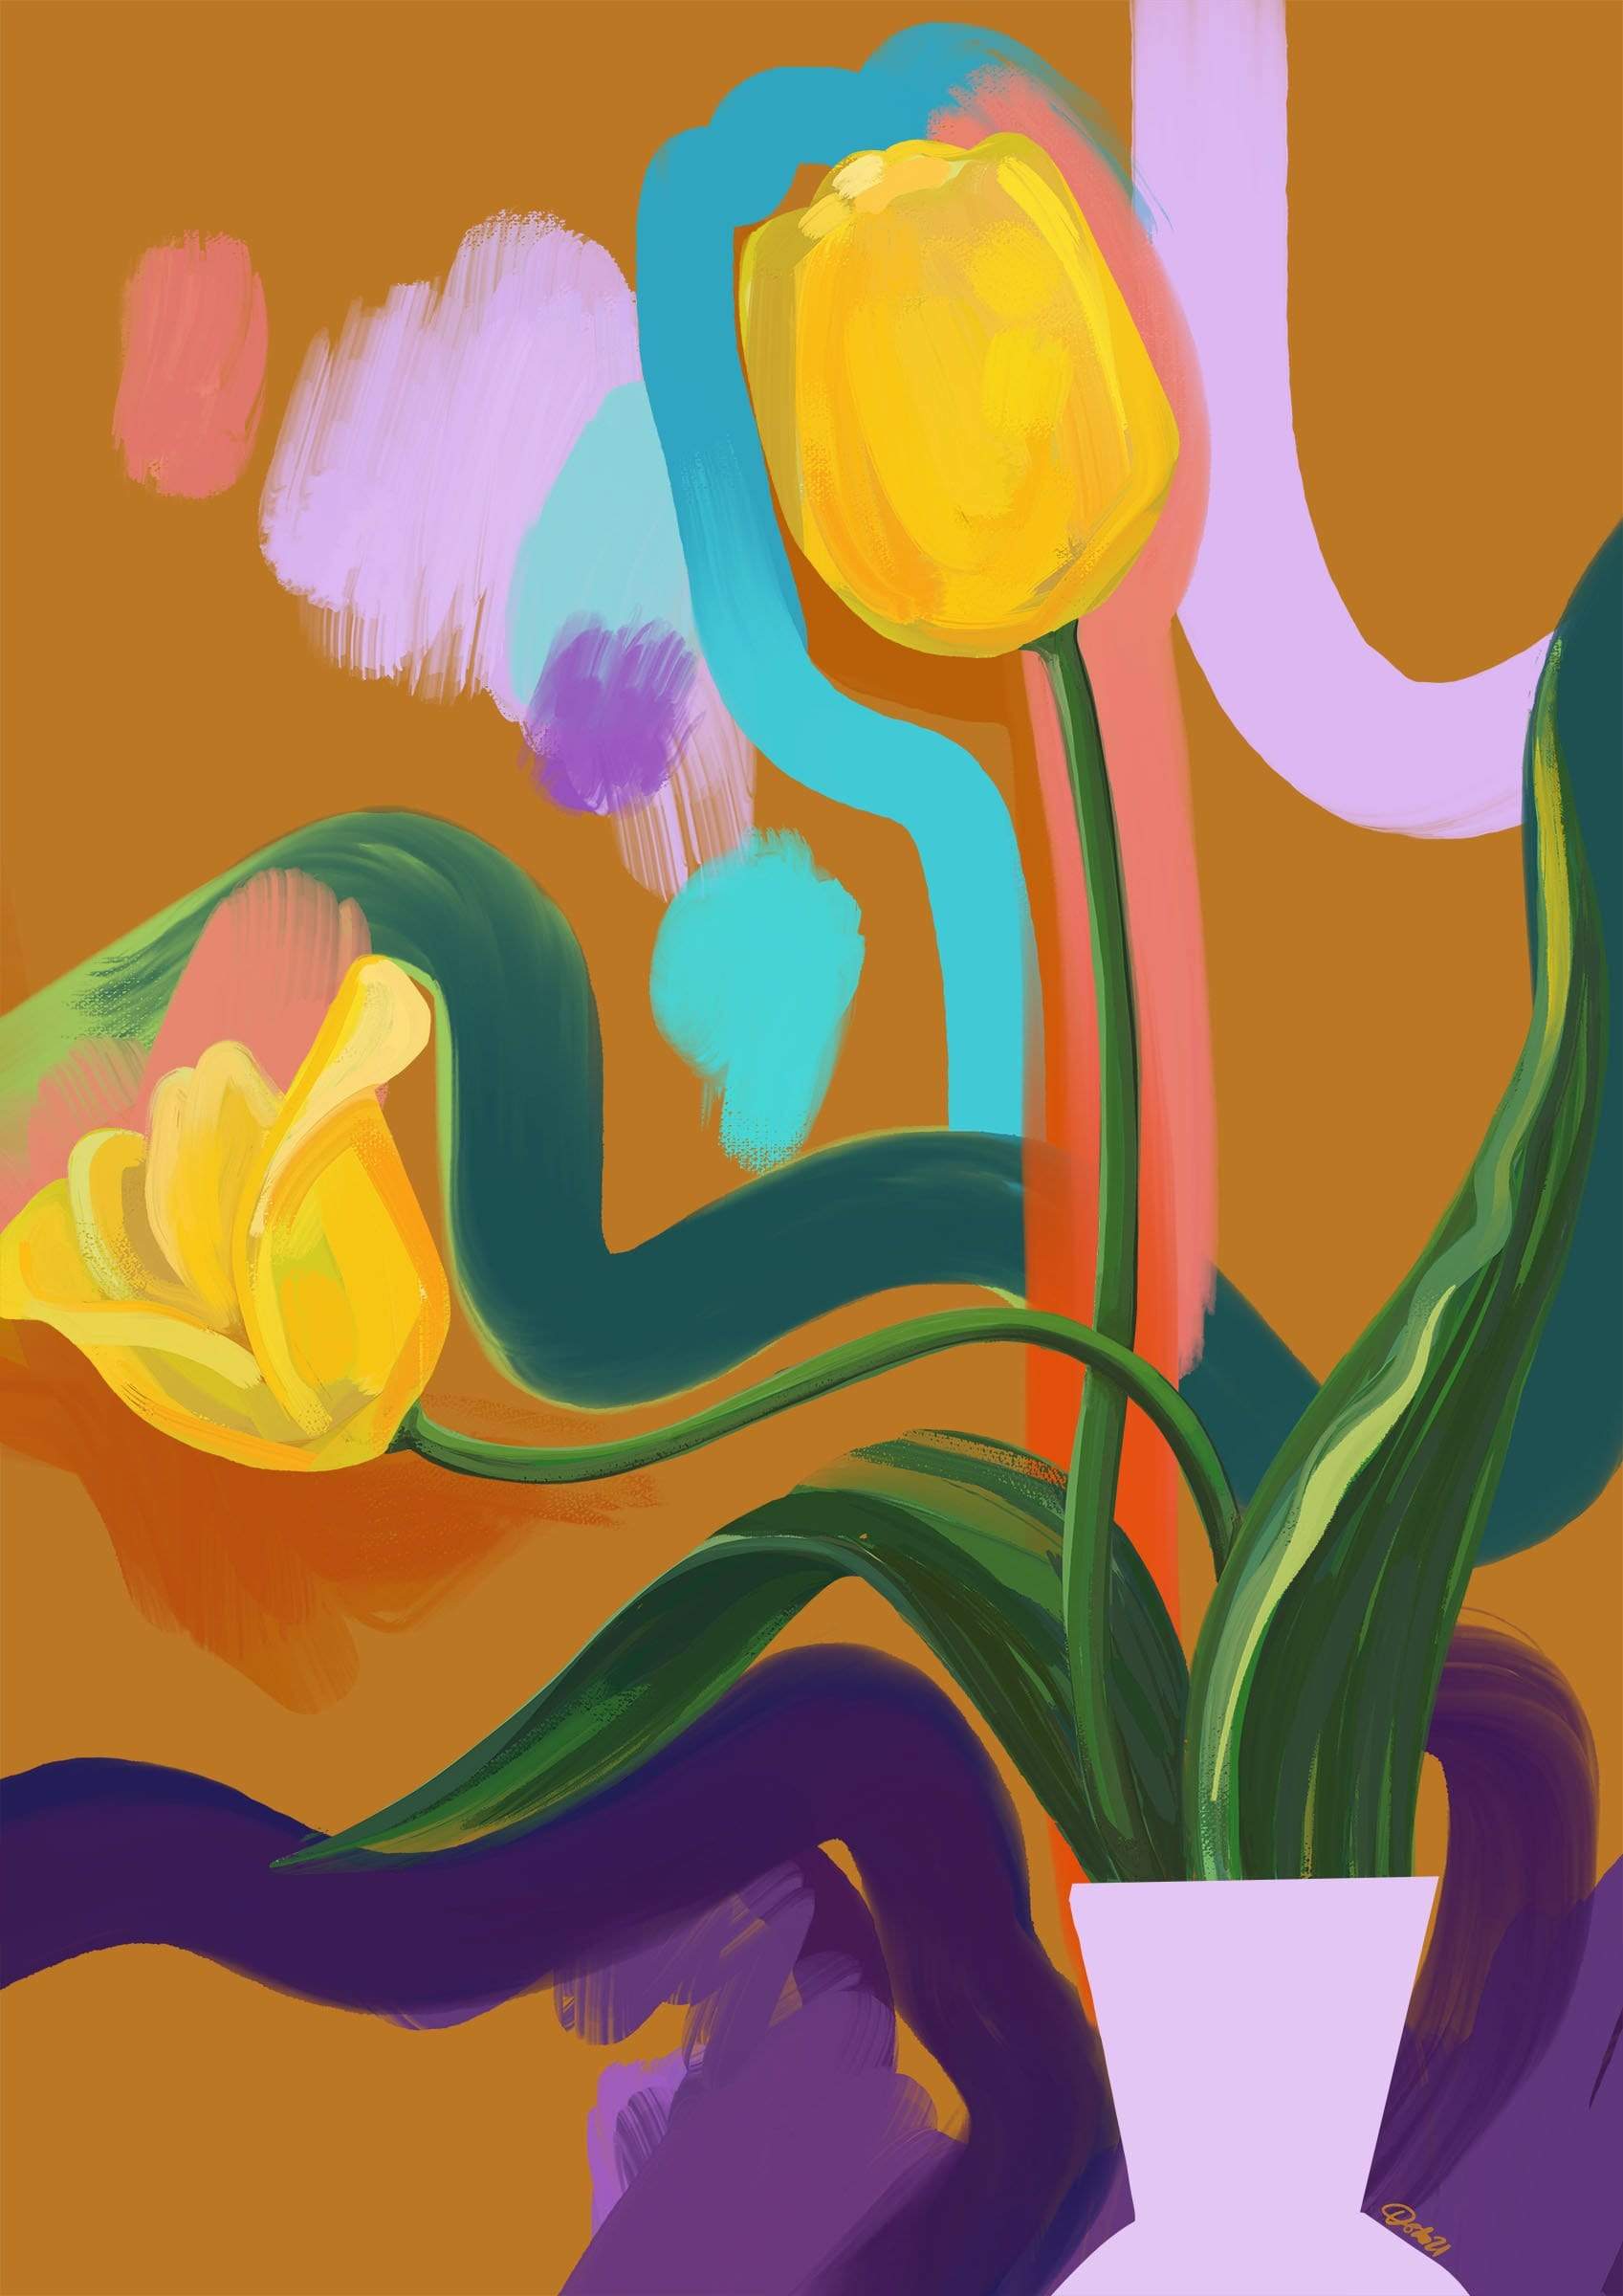 Through the Tulips - Yellow